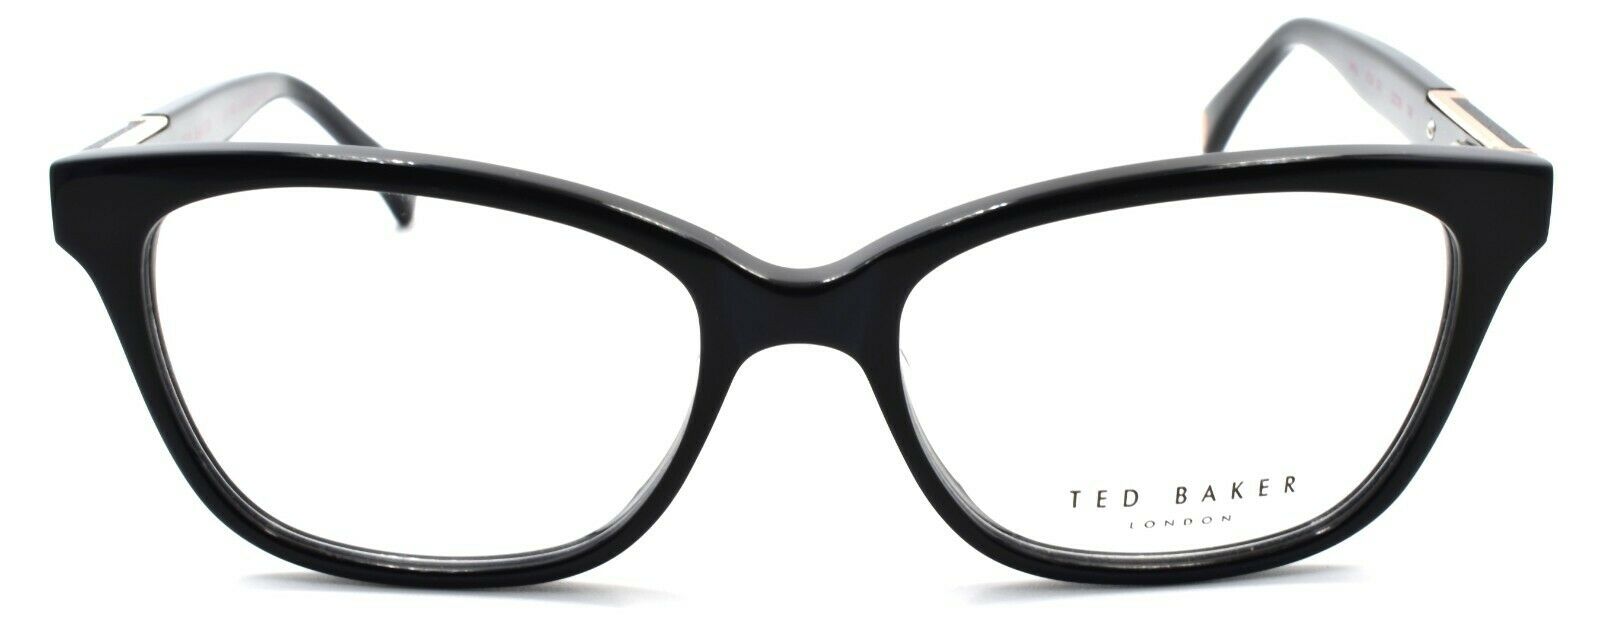 1-Ted Baker Senna 9124 001 Women's Eyeglasses Frames 52-16-140 Black-4894327141043-IKSpecs